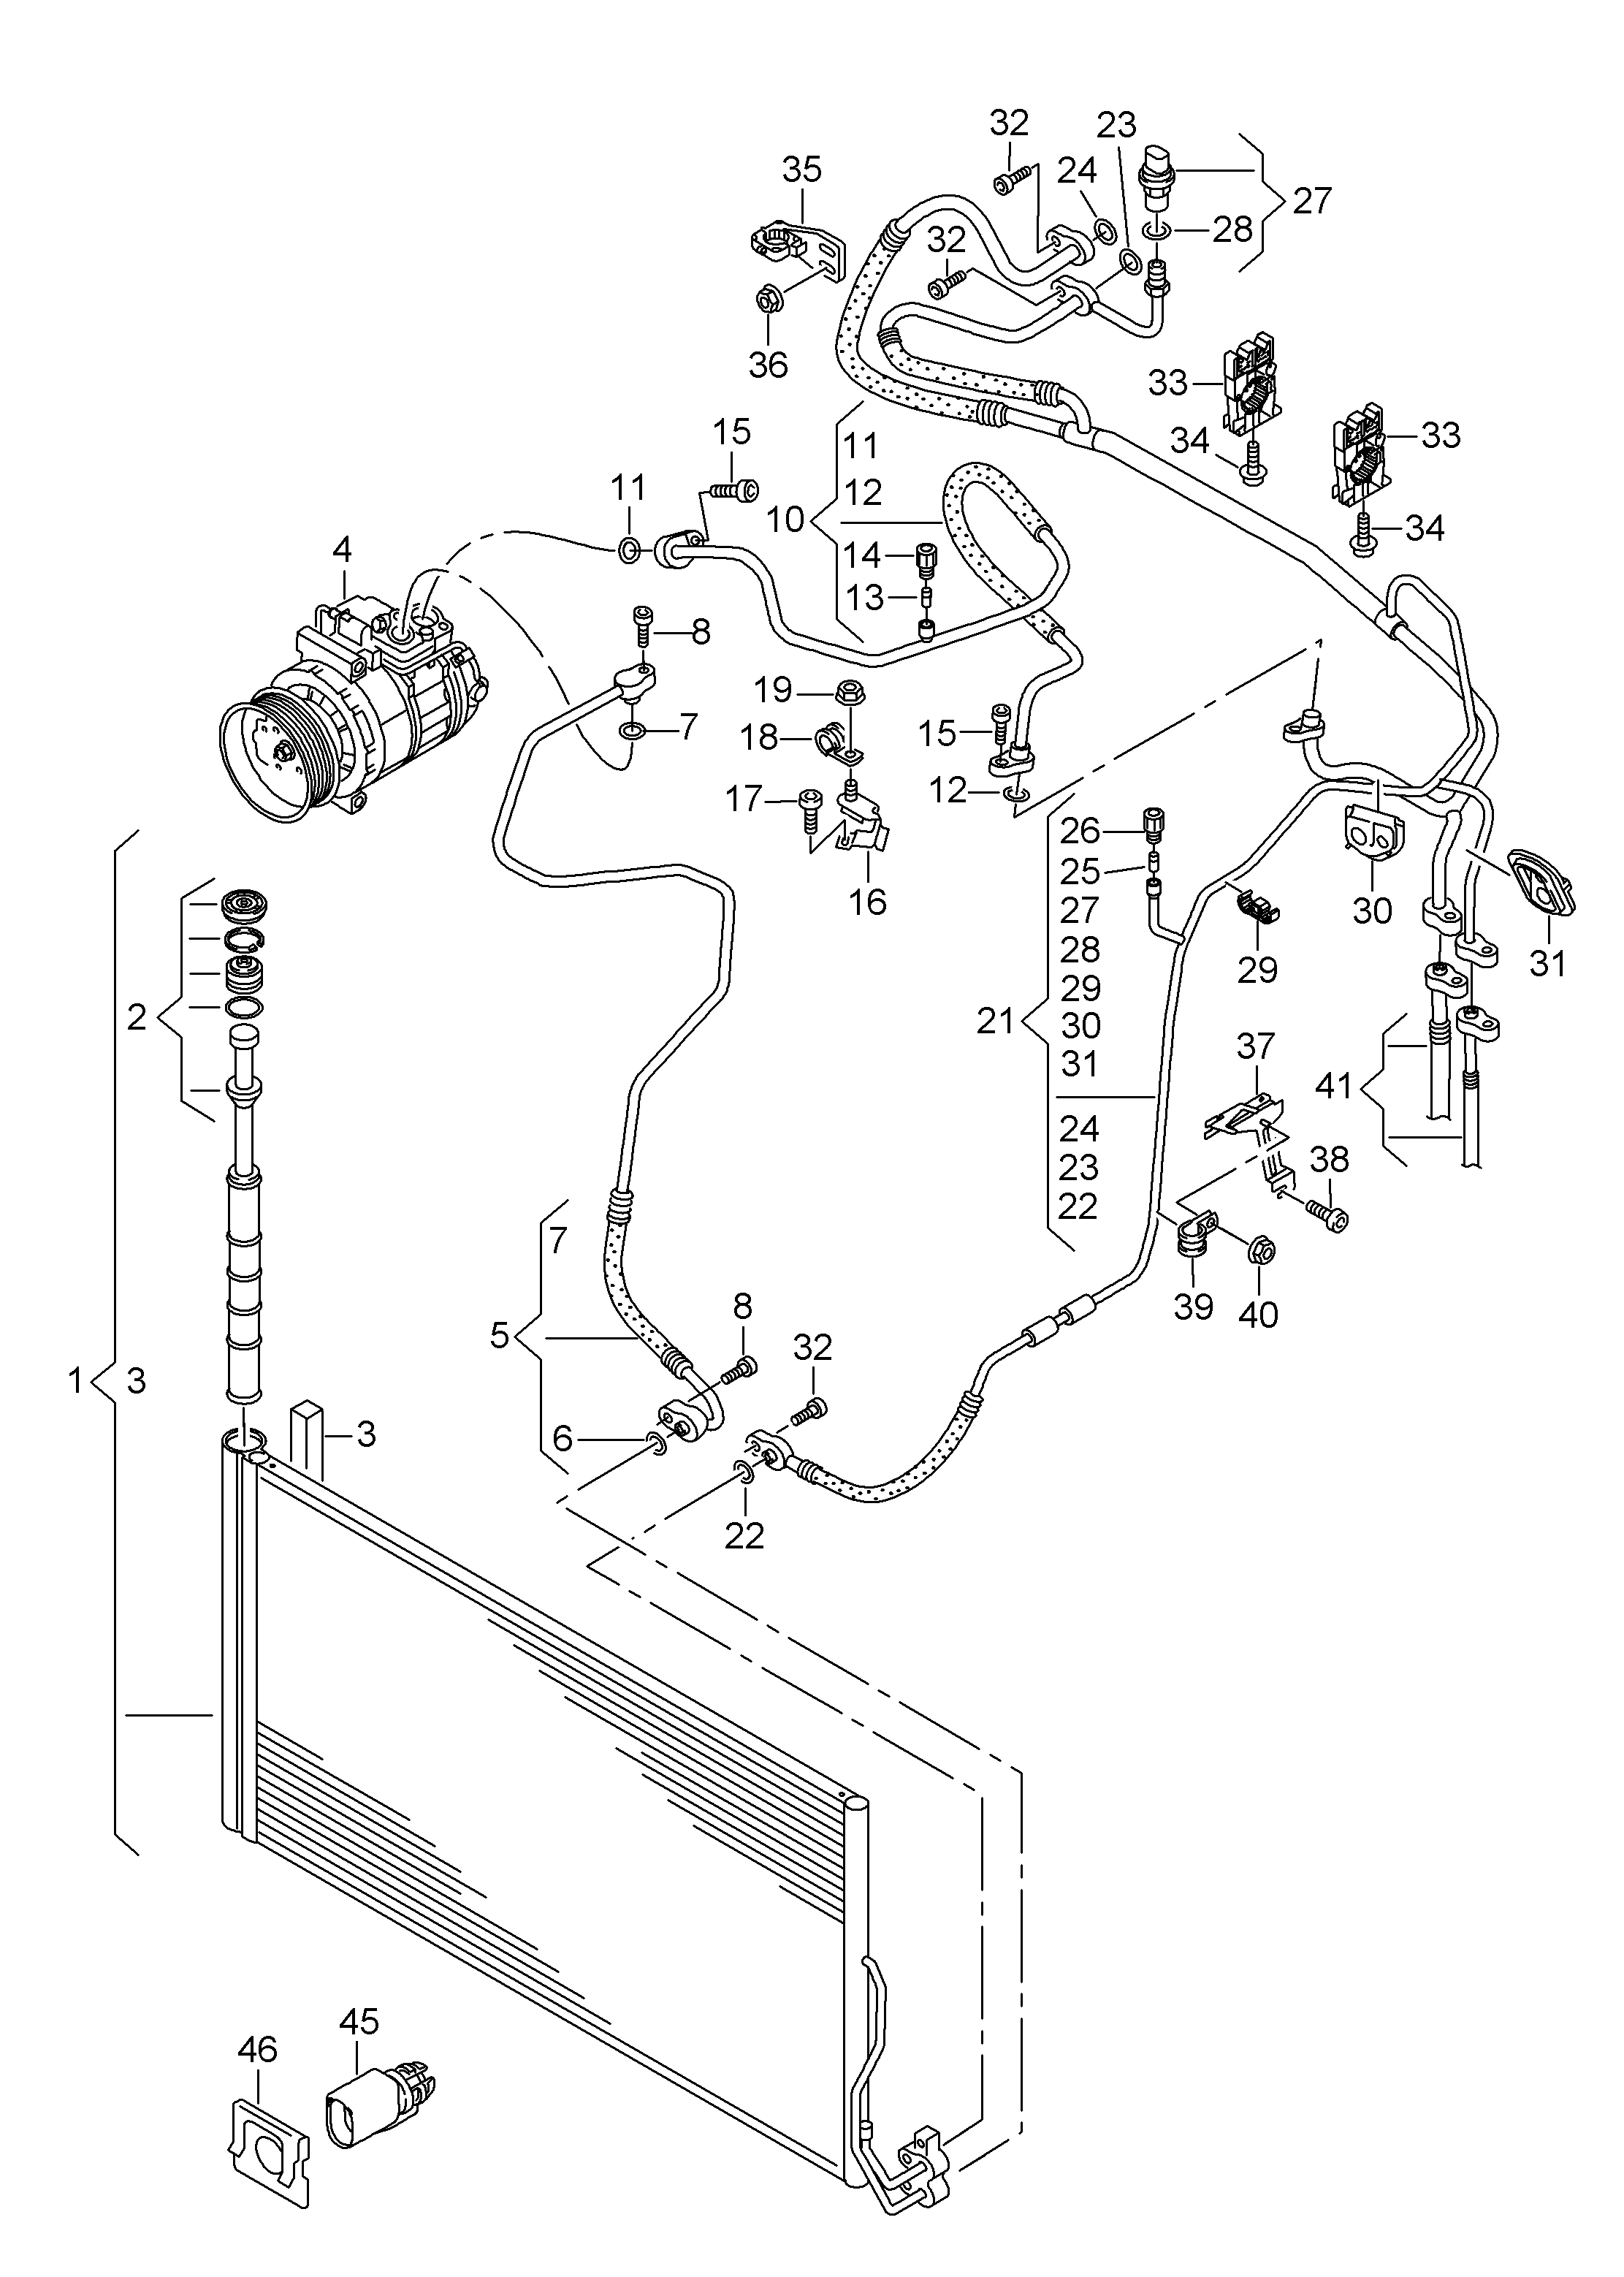 refrigerant circuit; a/c condenser with
dryer - Touareg(TOUA)  